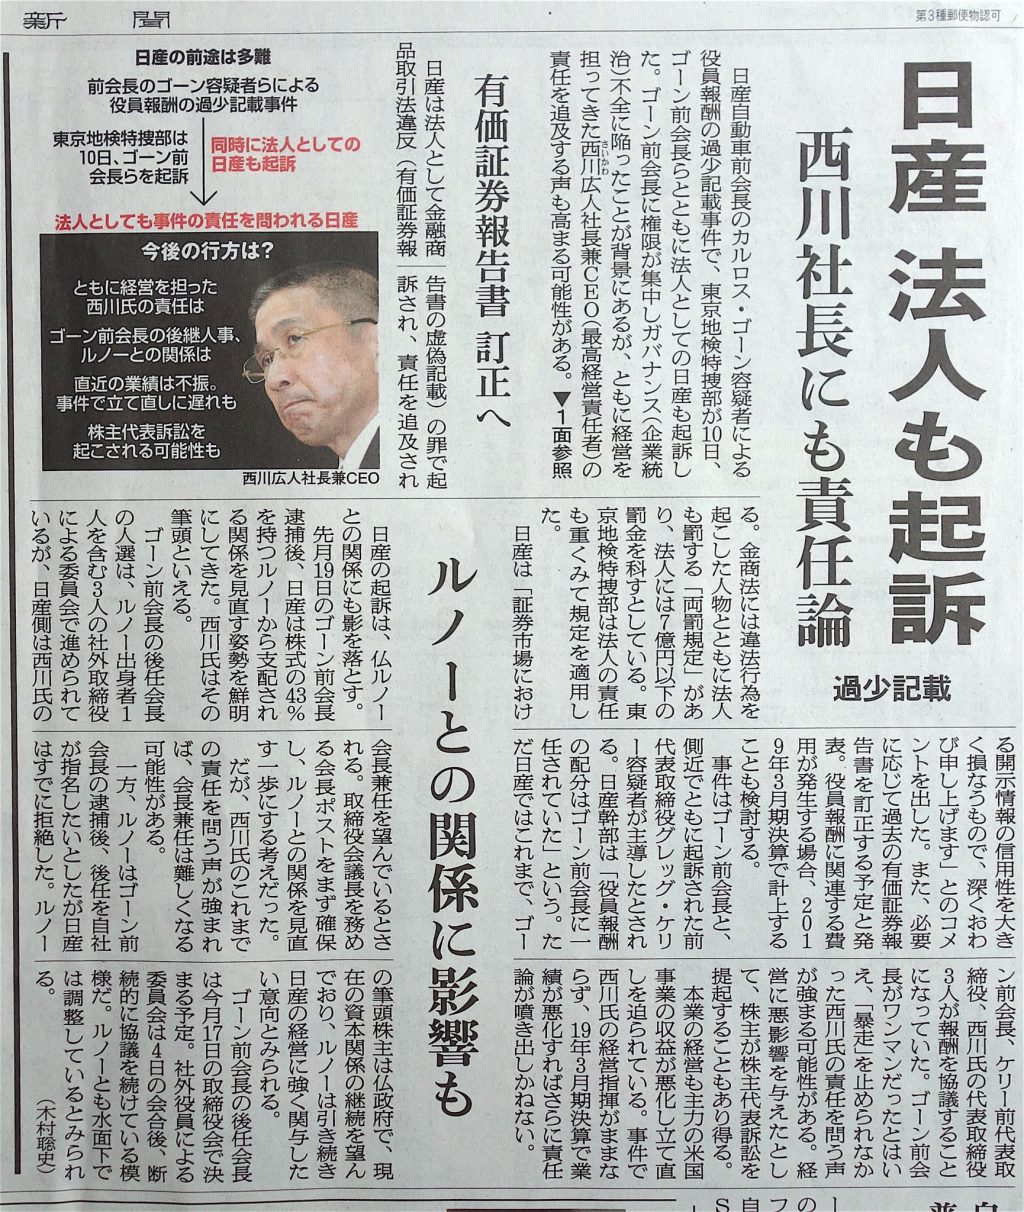 朝日新聞 2018年12月11日、西川廣人 Hiroto SAIKAWA, Nissan Motor Company